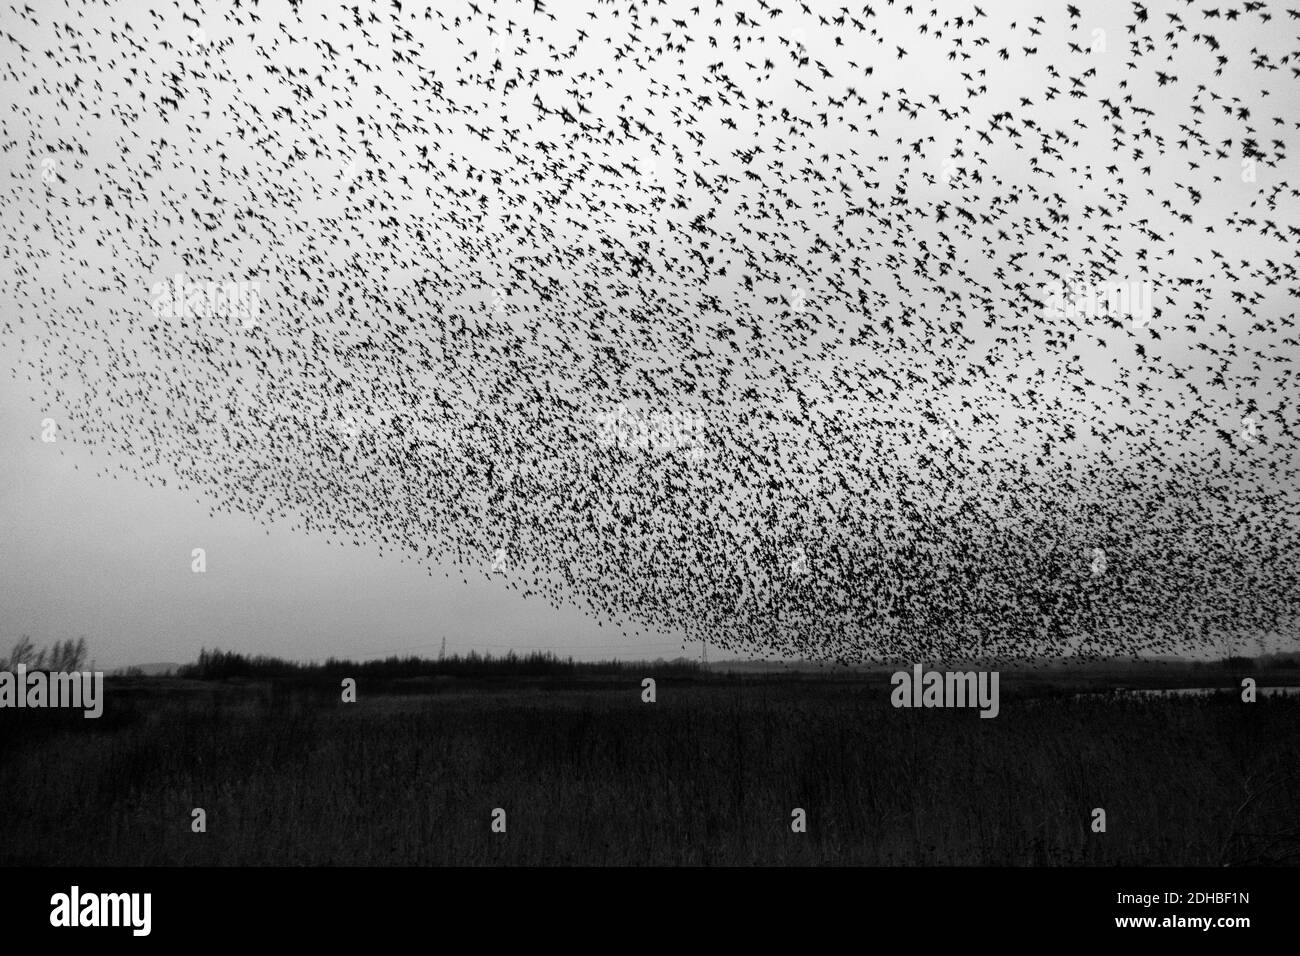 10 December 2020: UK Wildlife - Lucky visitors watch a murmuration of starlings (Sturnus vulgaris) overhead at RSPB nature reserve, Fairburn Ings, West Yorkshire, England, UK Stock Photo